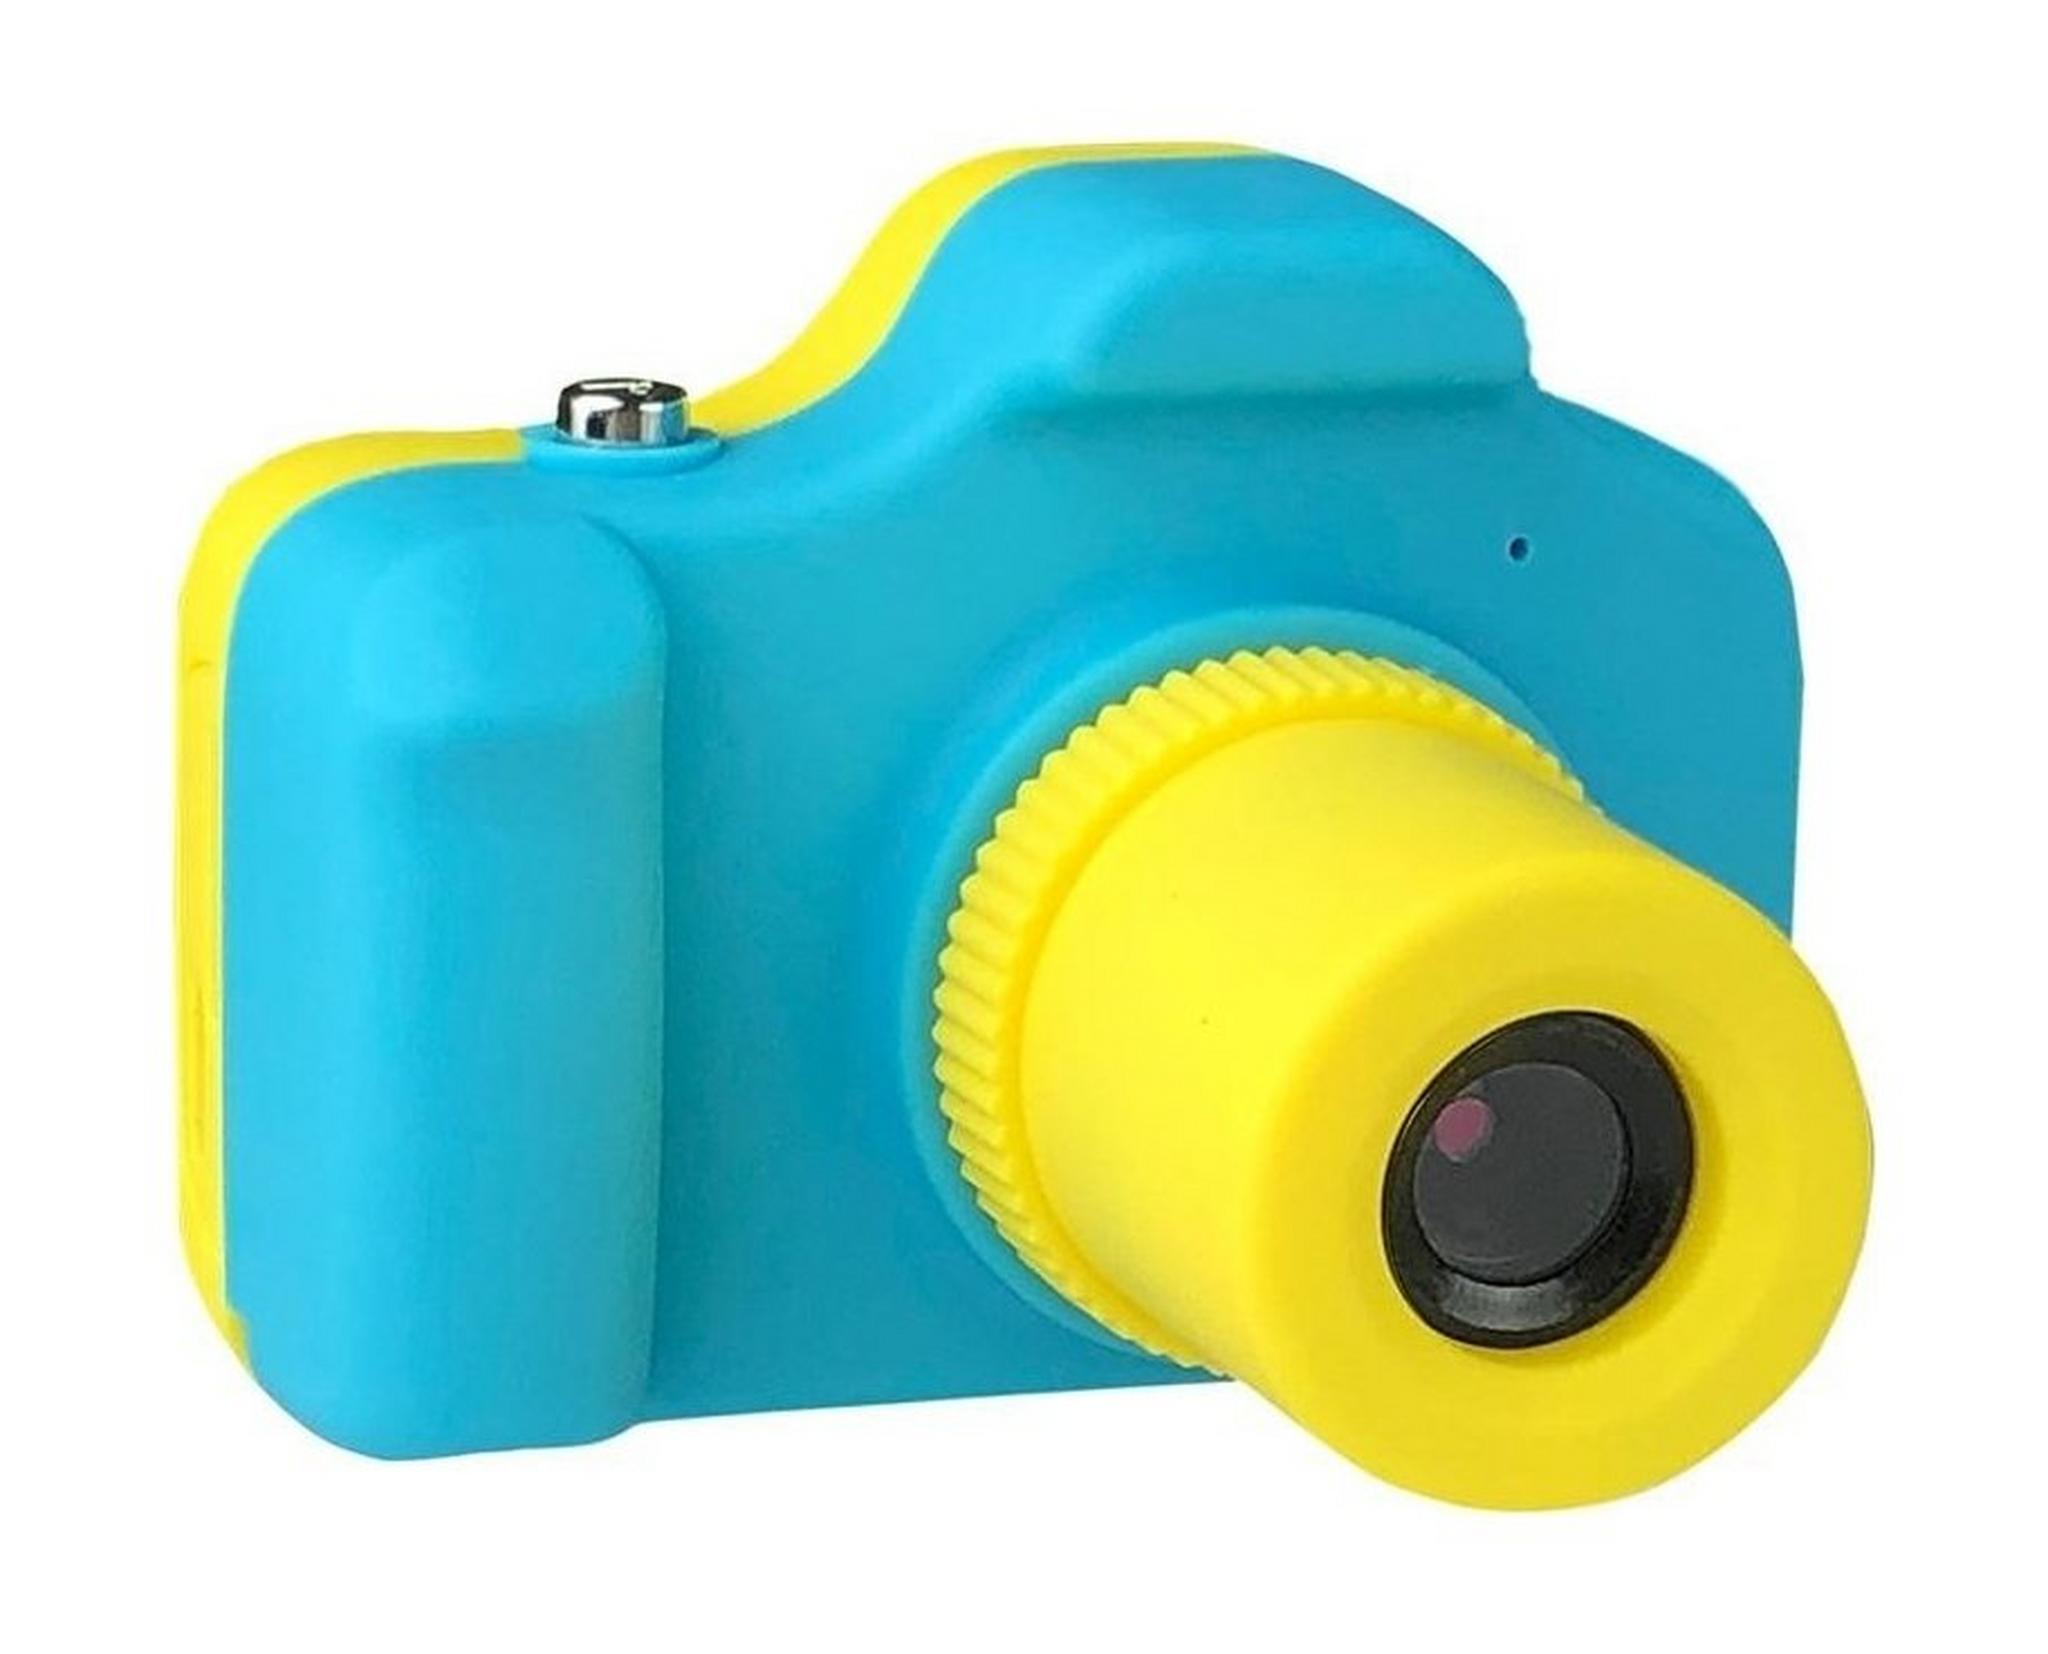 Myfirst Camera 5MP Kids DSLR - Blue